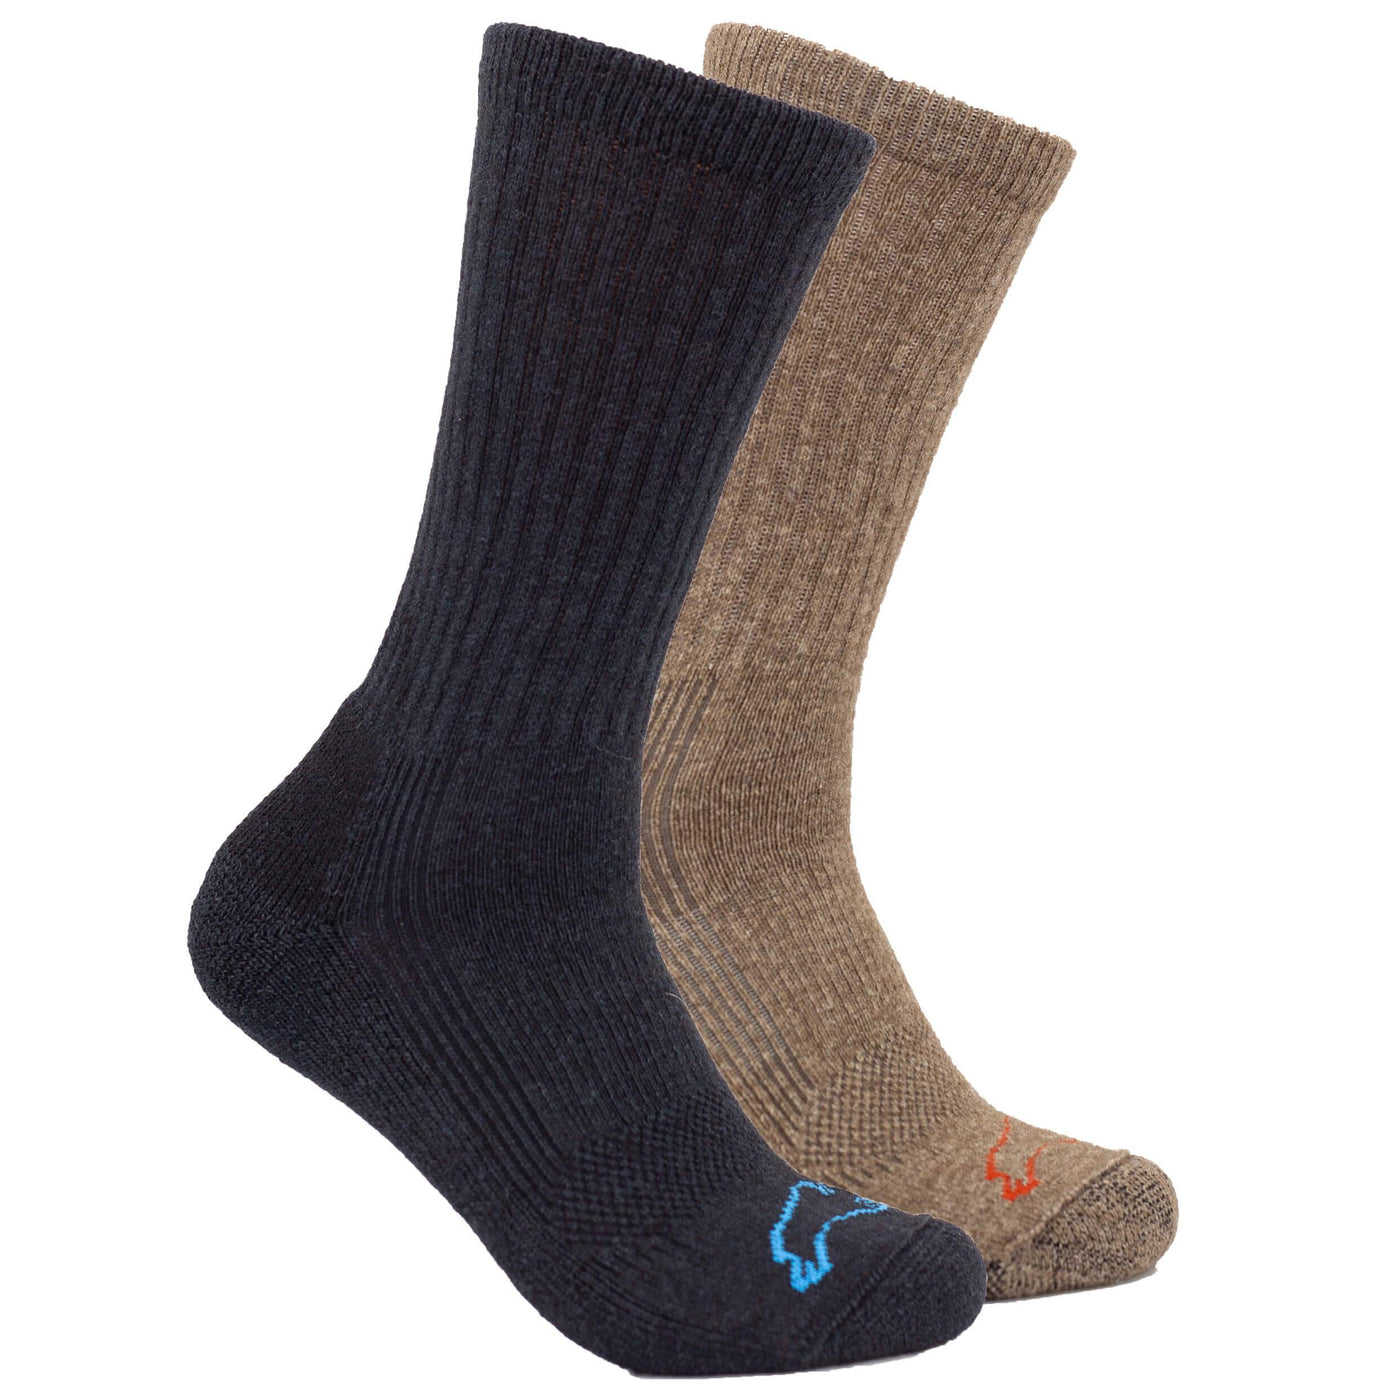 Buy LIFE Multi Mens Sports Half Terry Ankle Socks - Pack Of 3